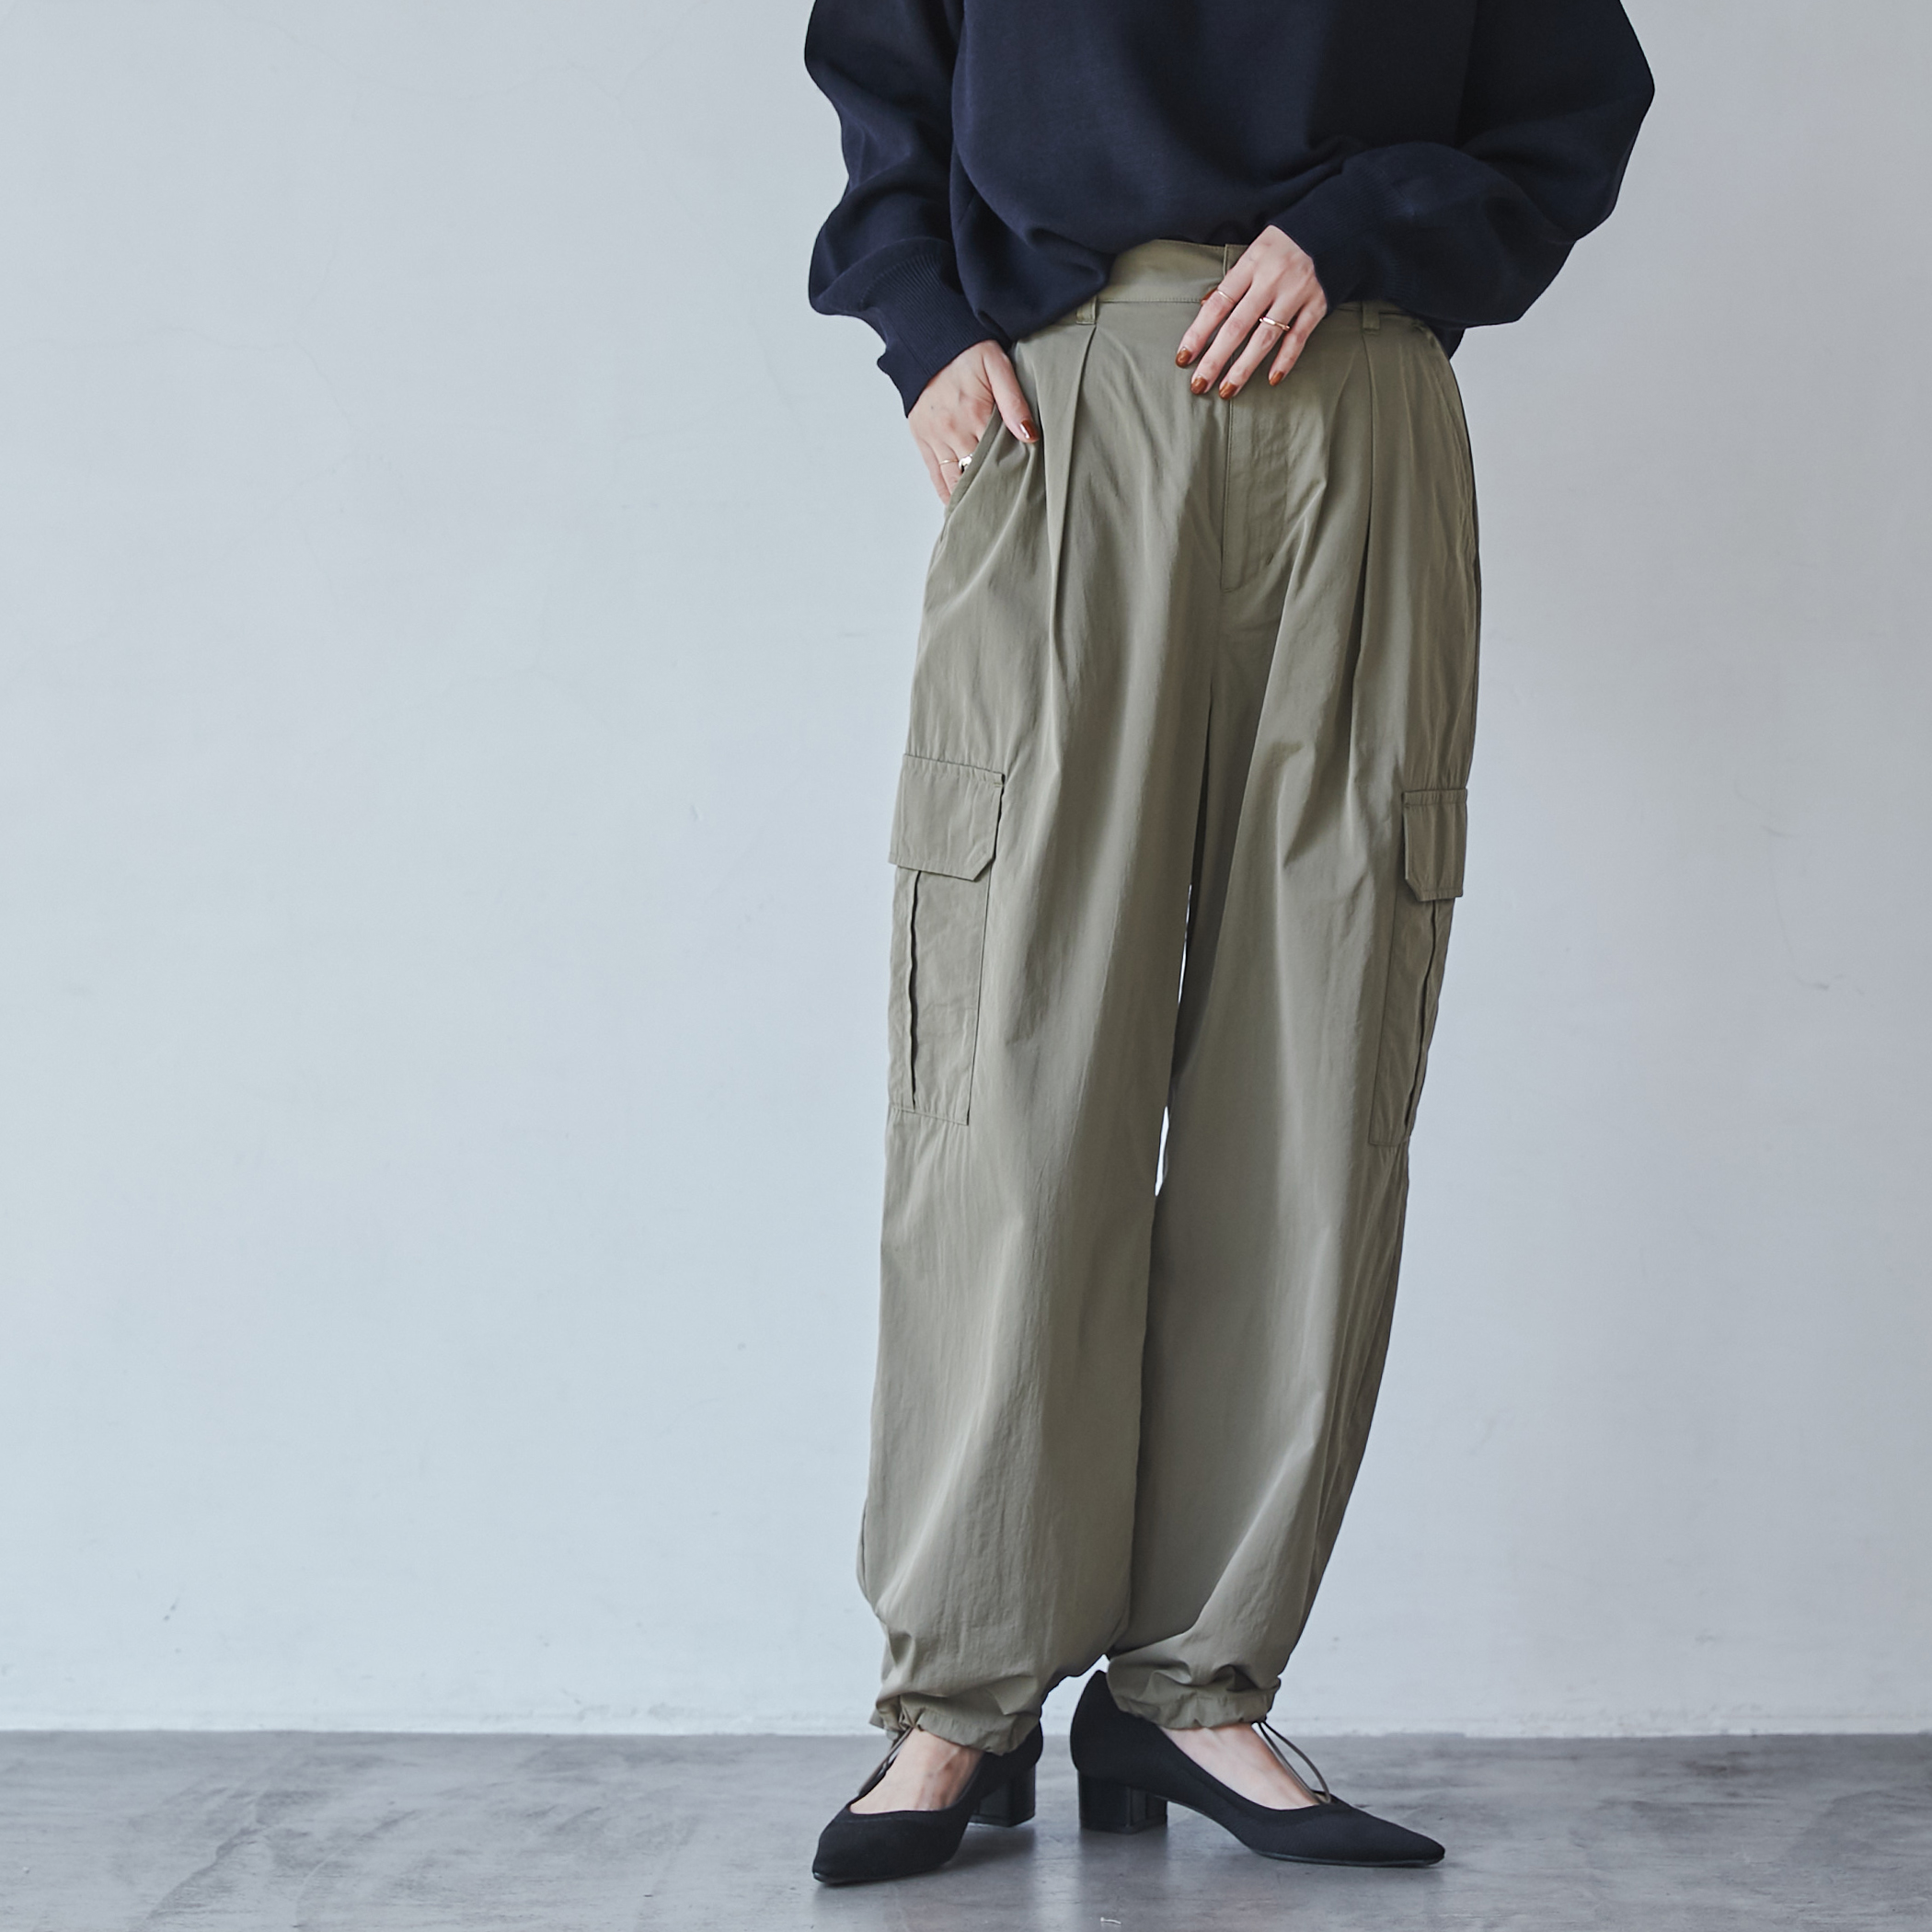 YACA 【新品】nylon cargo pants ナイロンカーゴパンツ